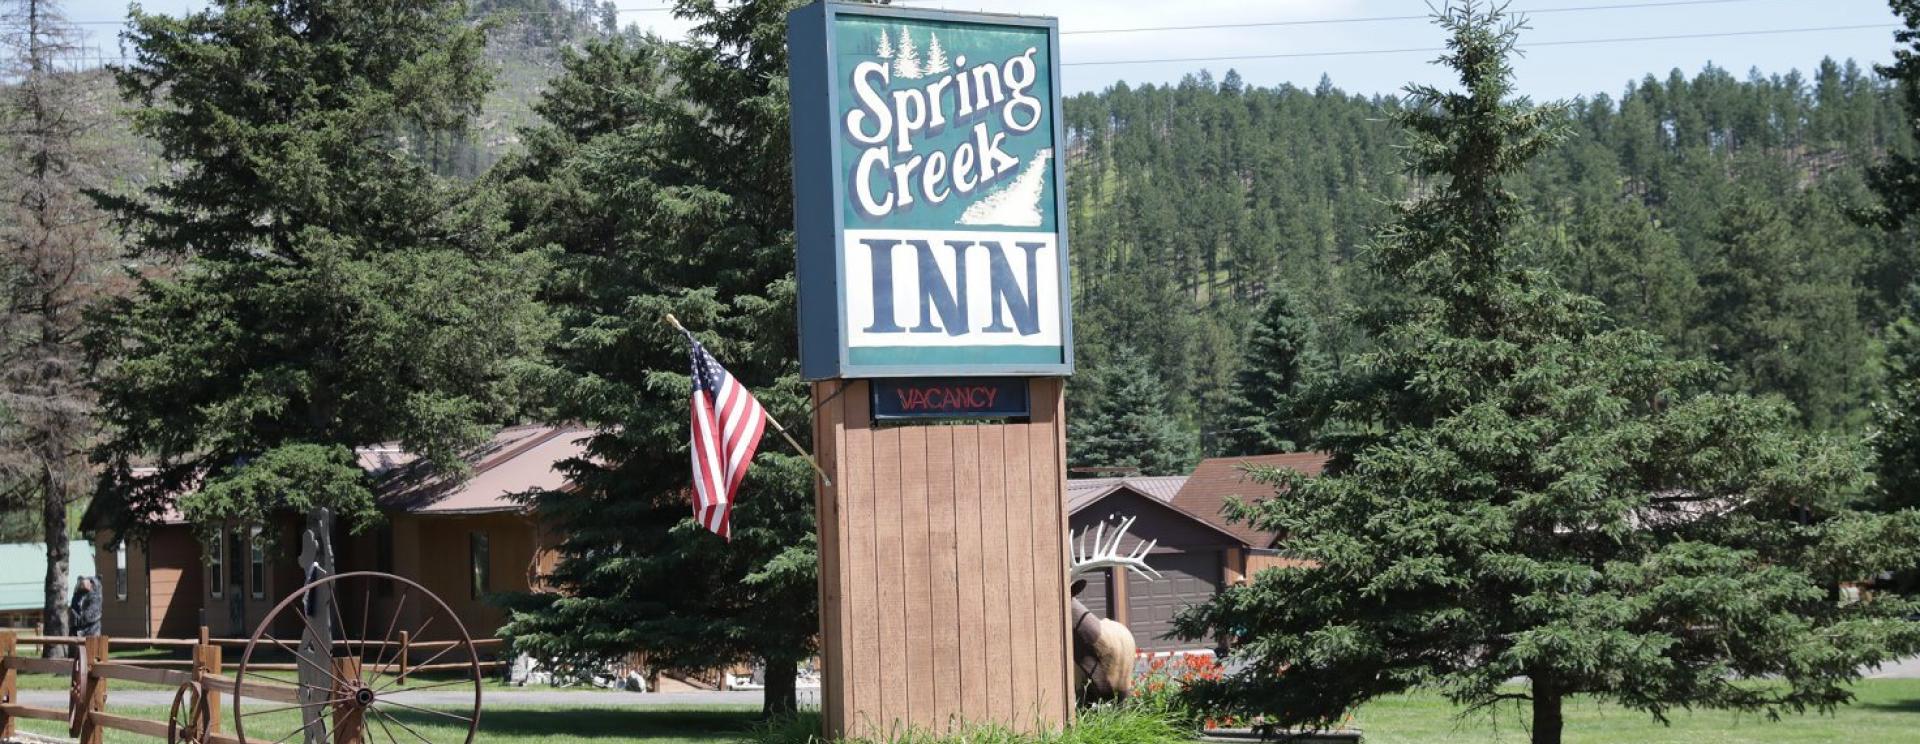 Spring Creek Inn